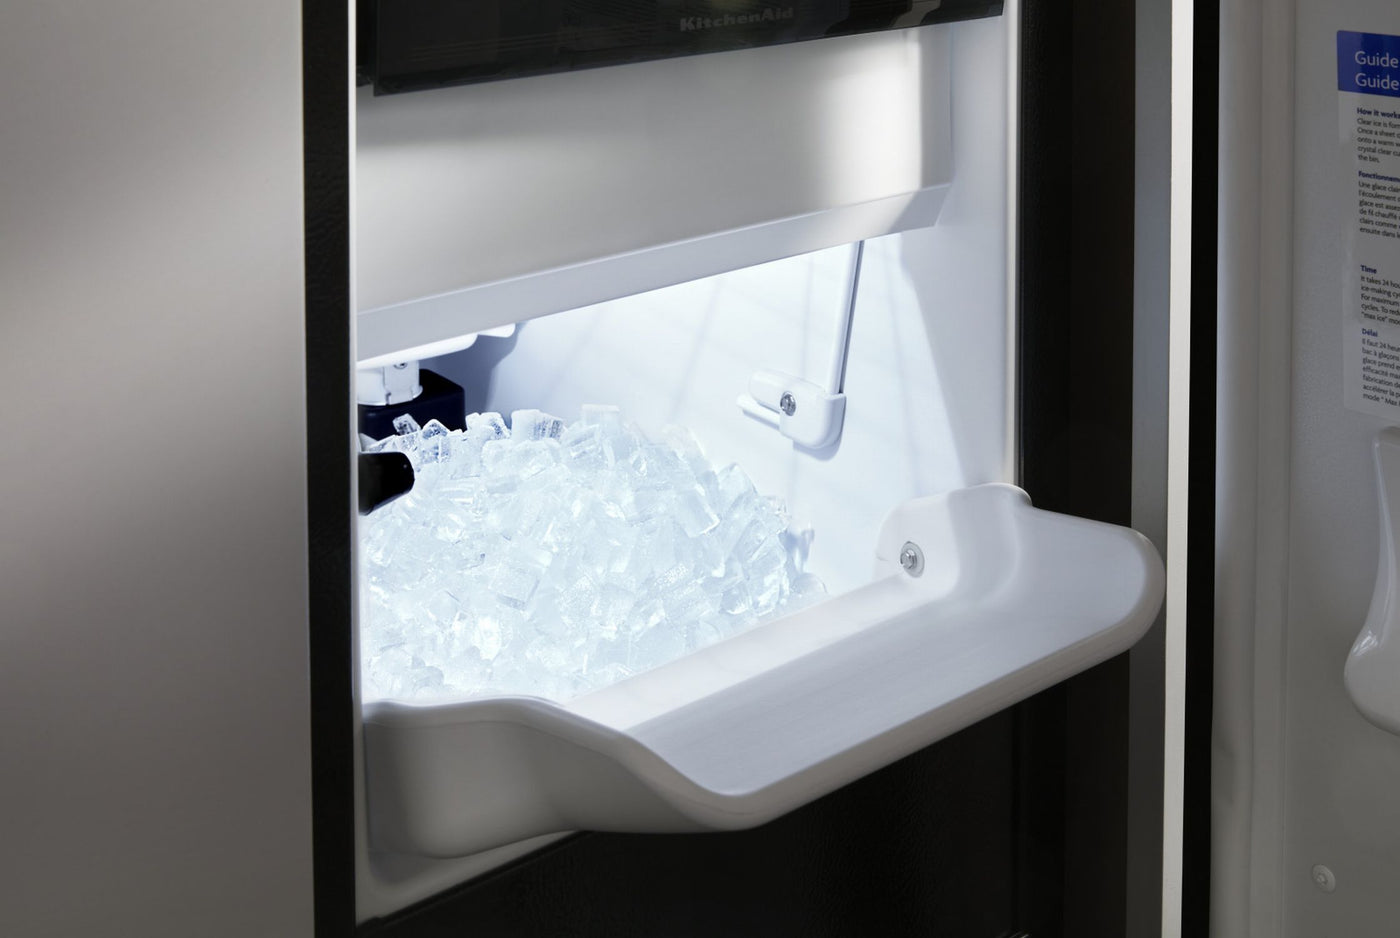 KitchenAid PrintShield Stainless Finish Automatic Ice Maker (15 inch.) - KUIX335HPS